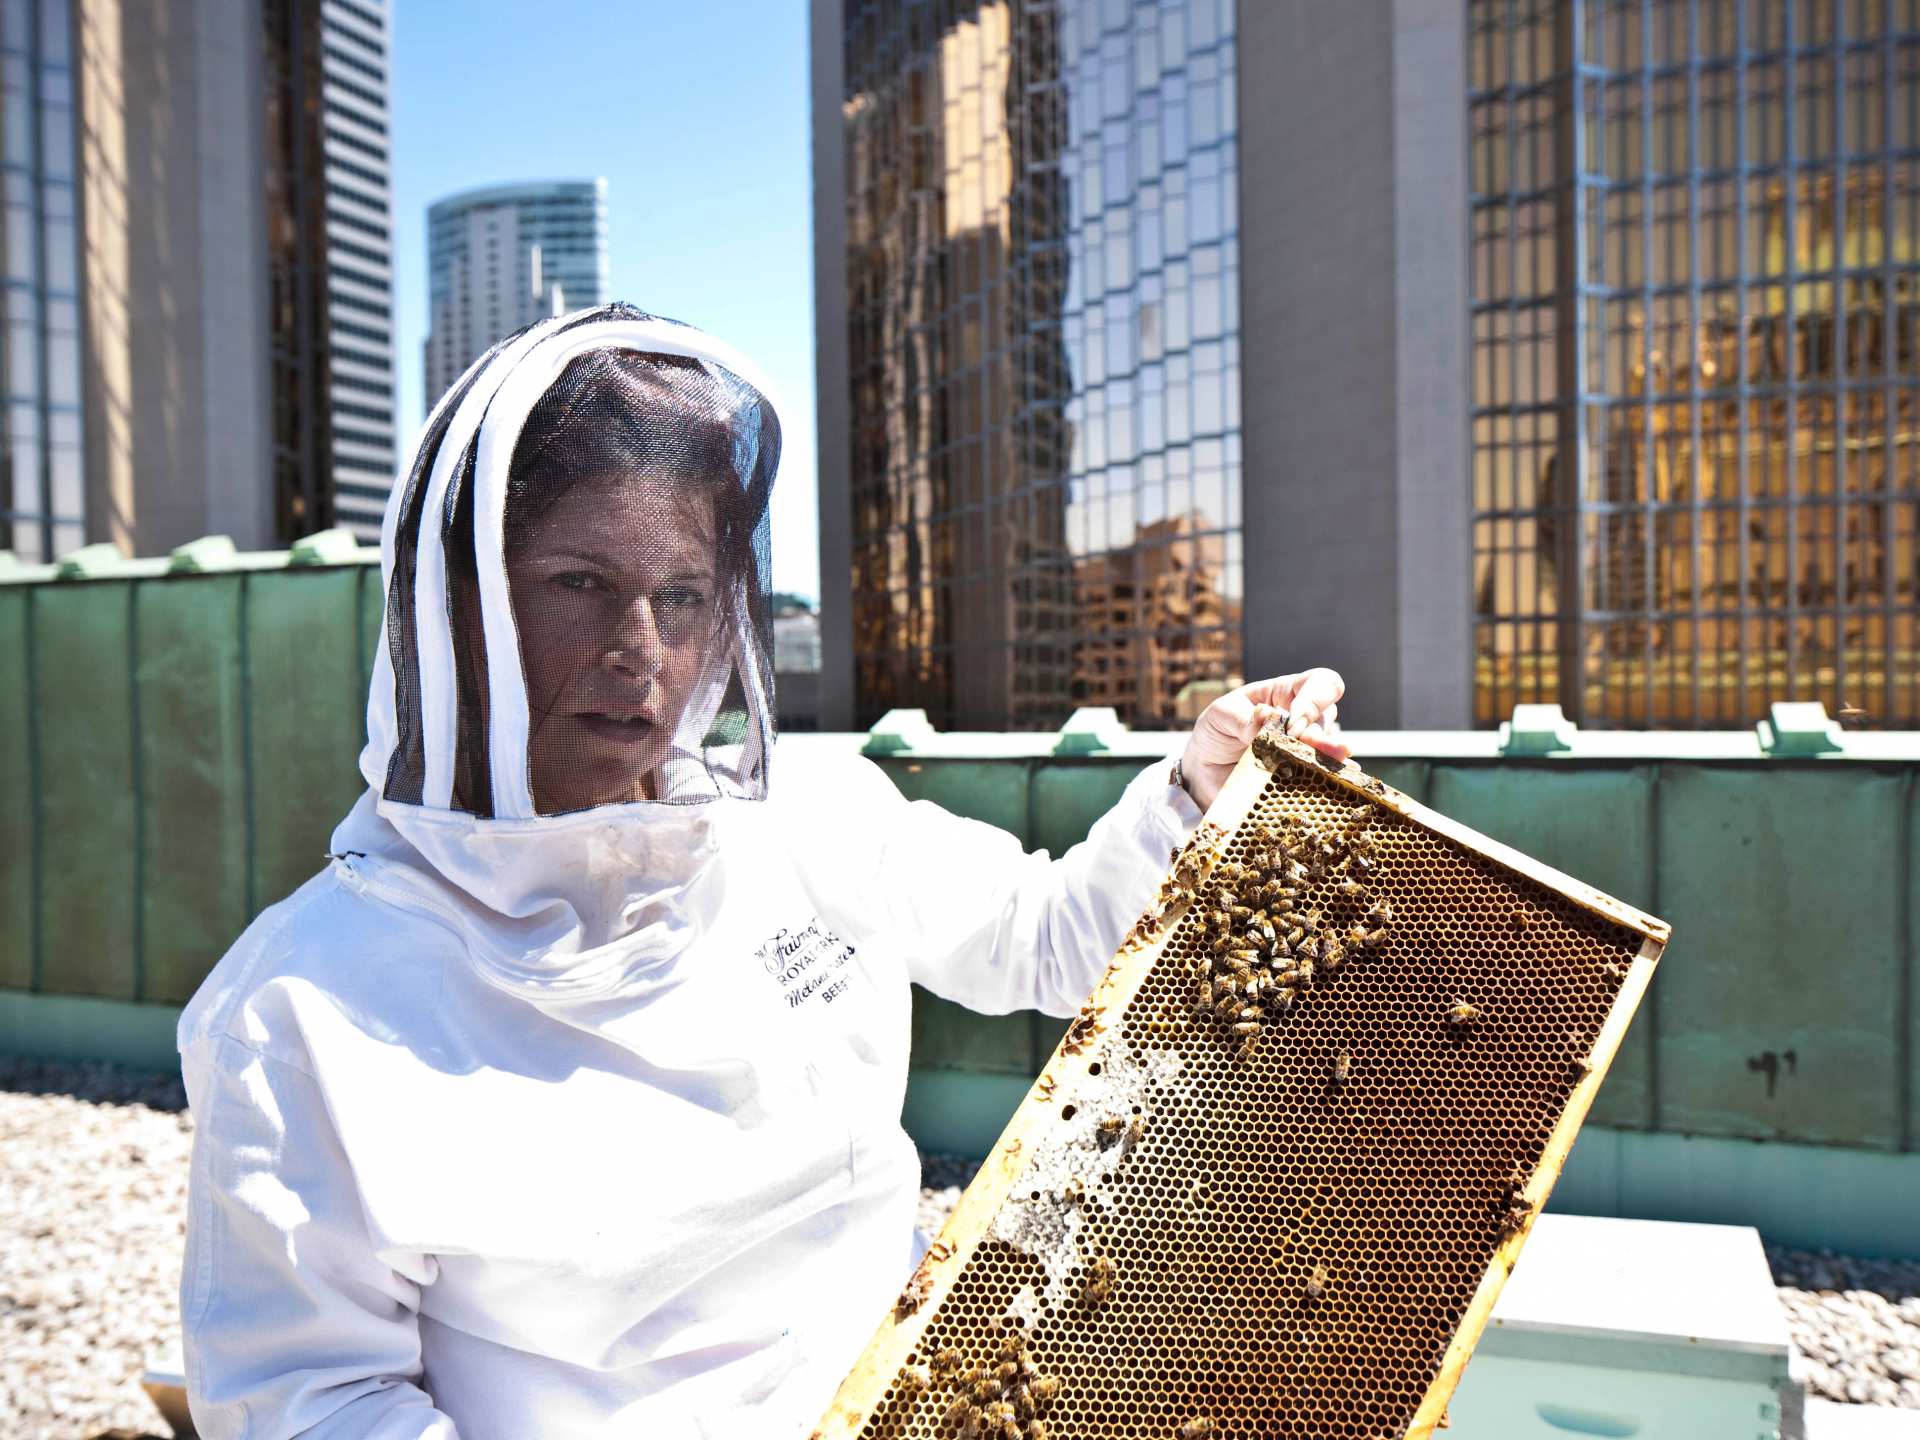 Honey and honeycomb | Melanie Coates harvesting honey